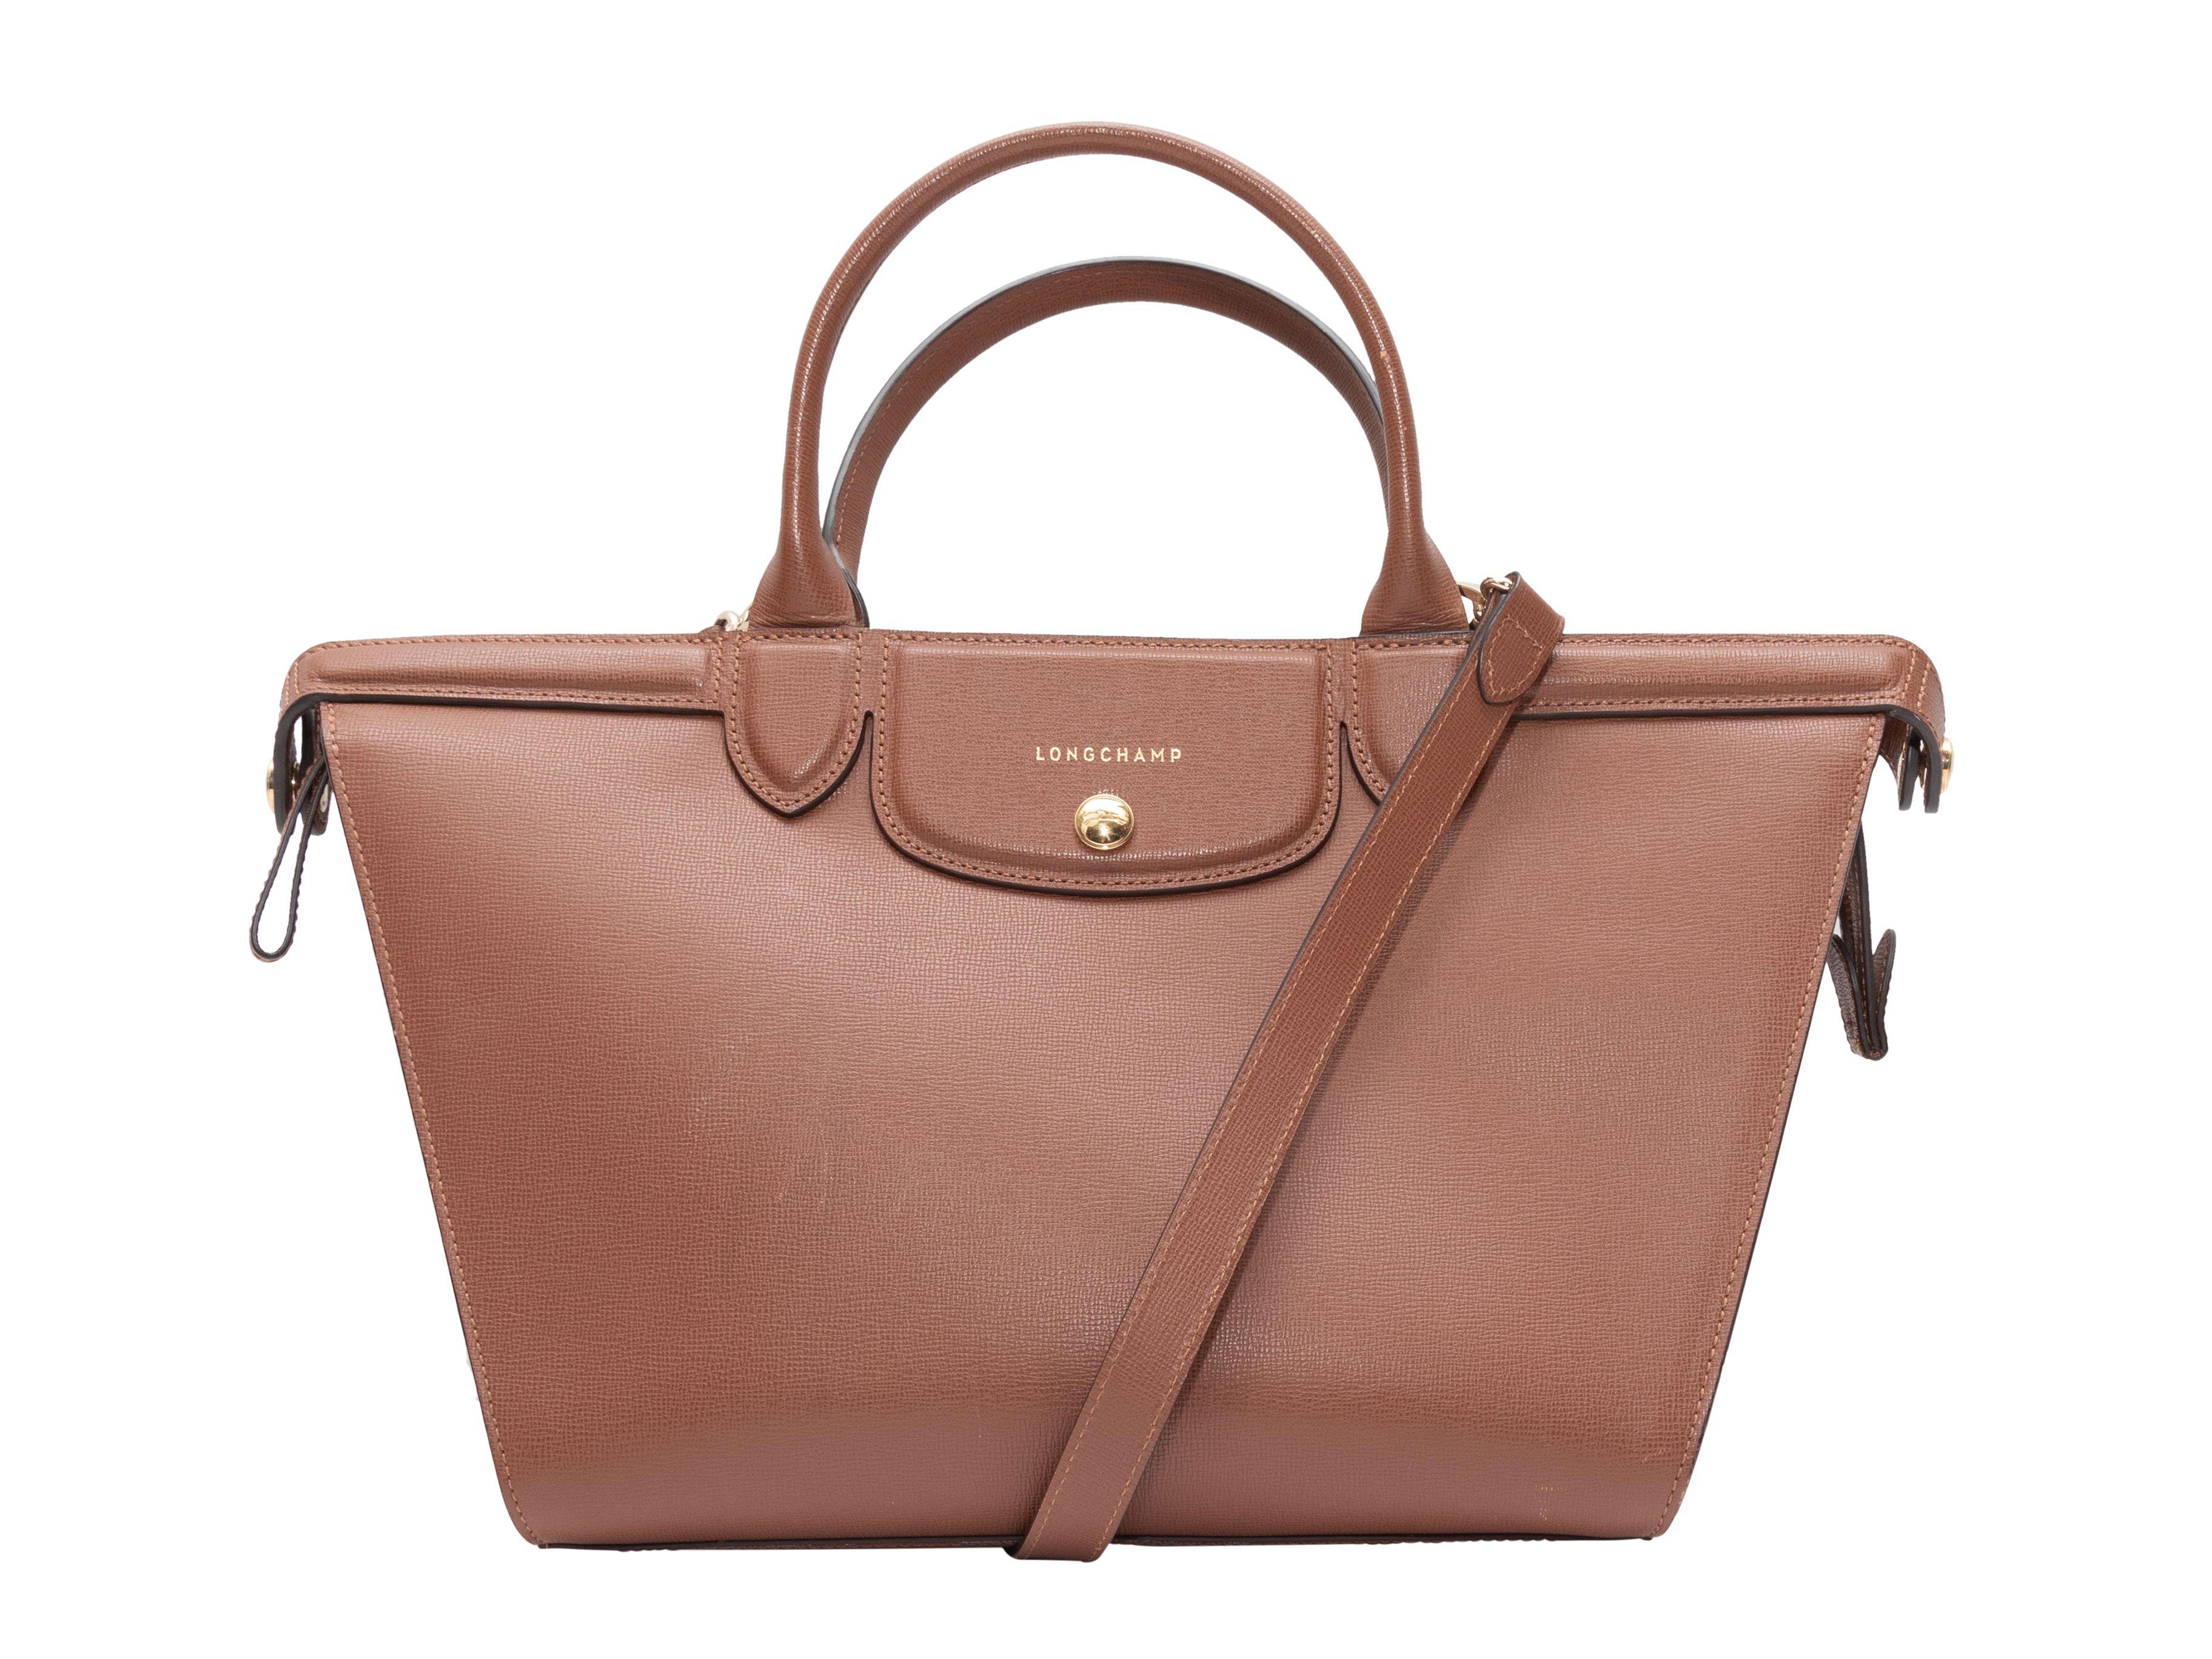 Longchamp Brown Leather Tote Bag 3